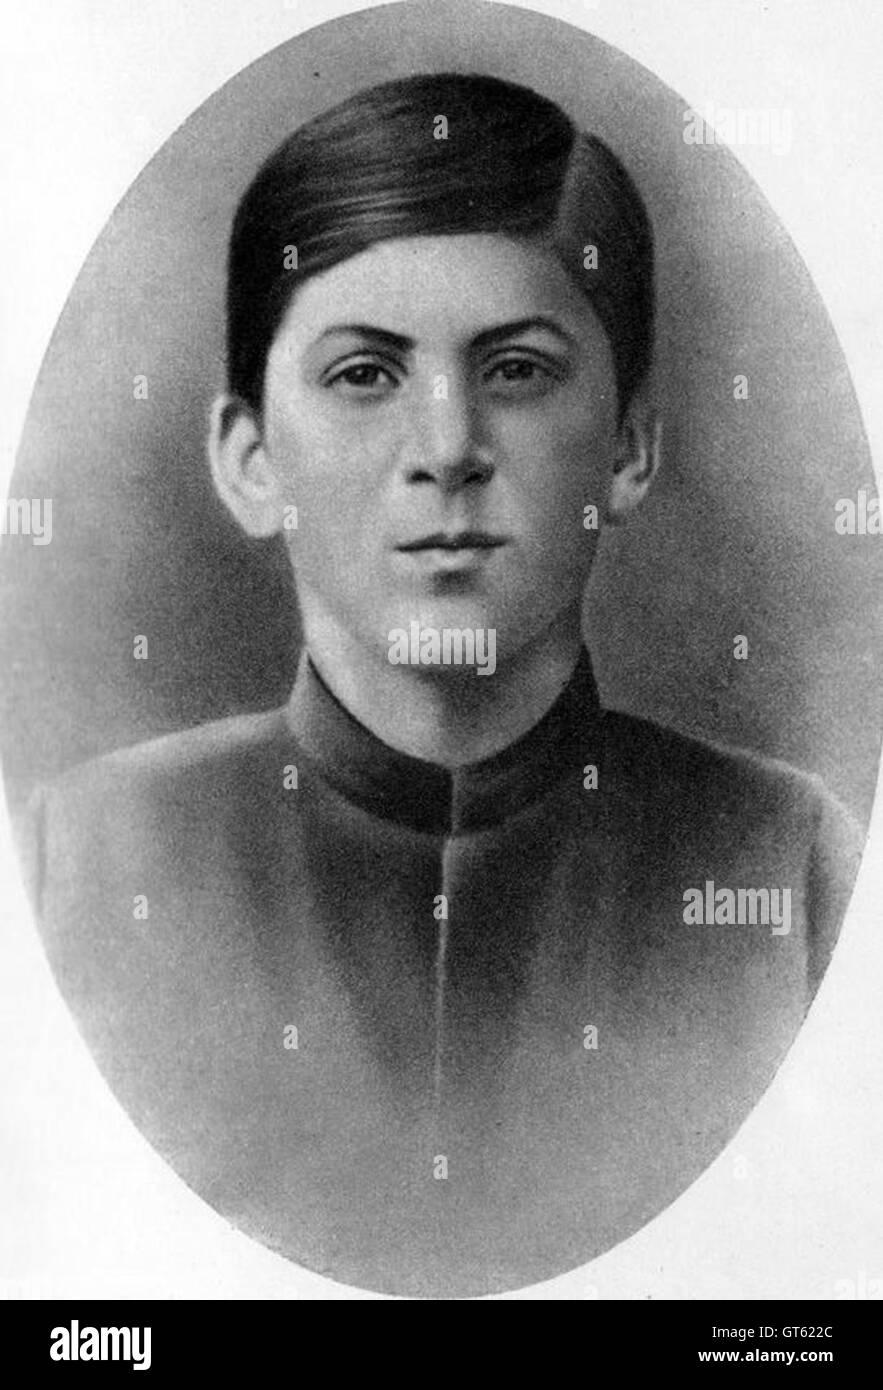 Joseph Stalin aged 15 Stock Photo